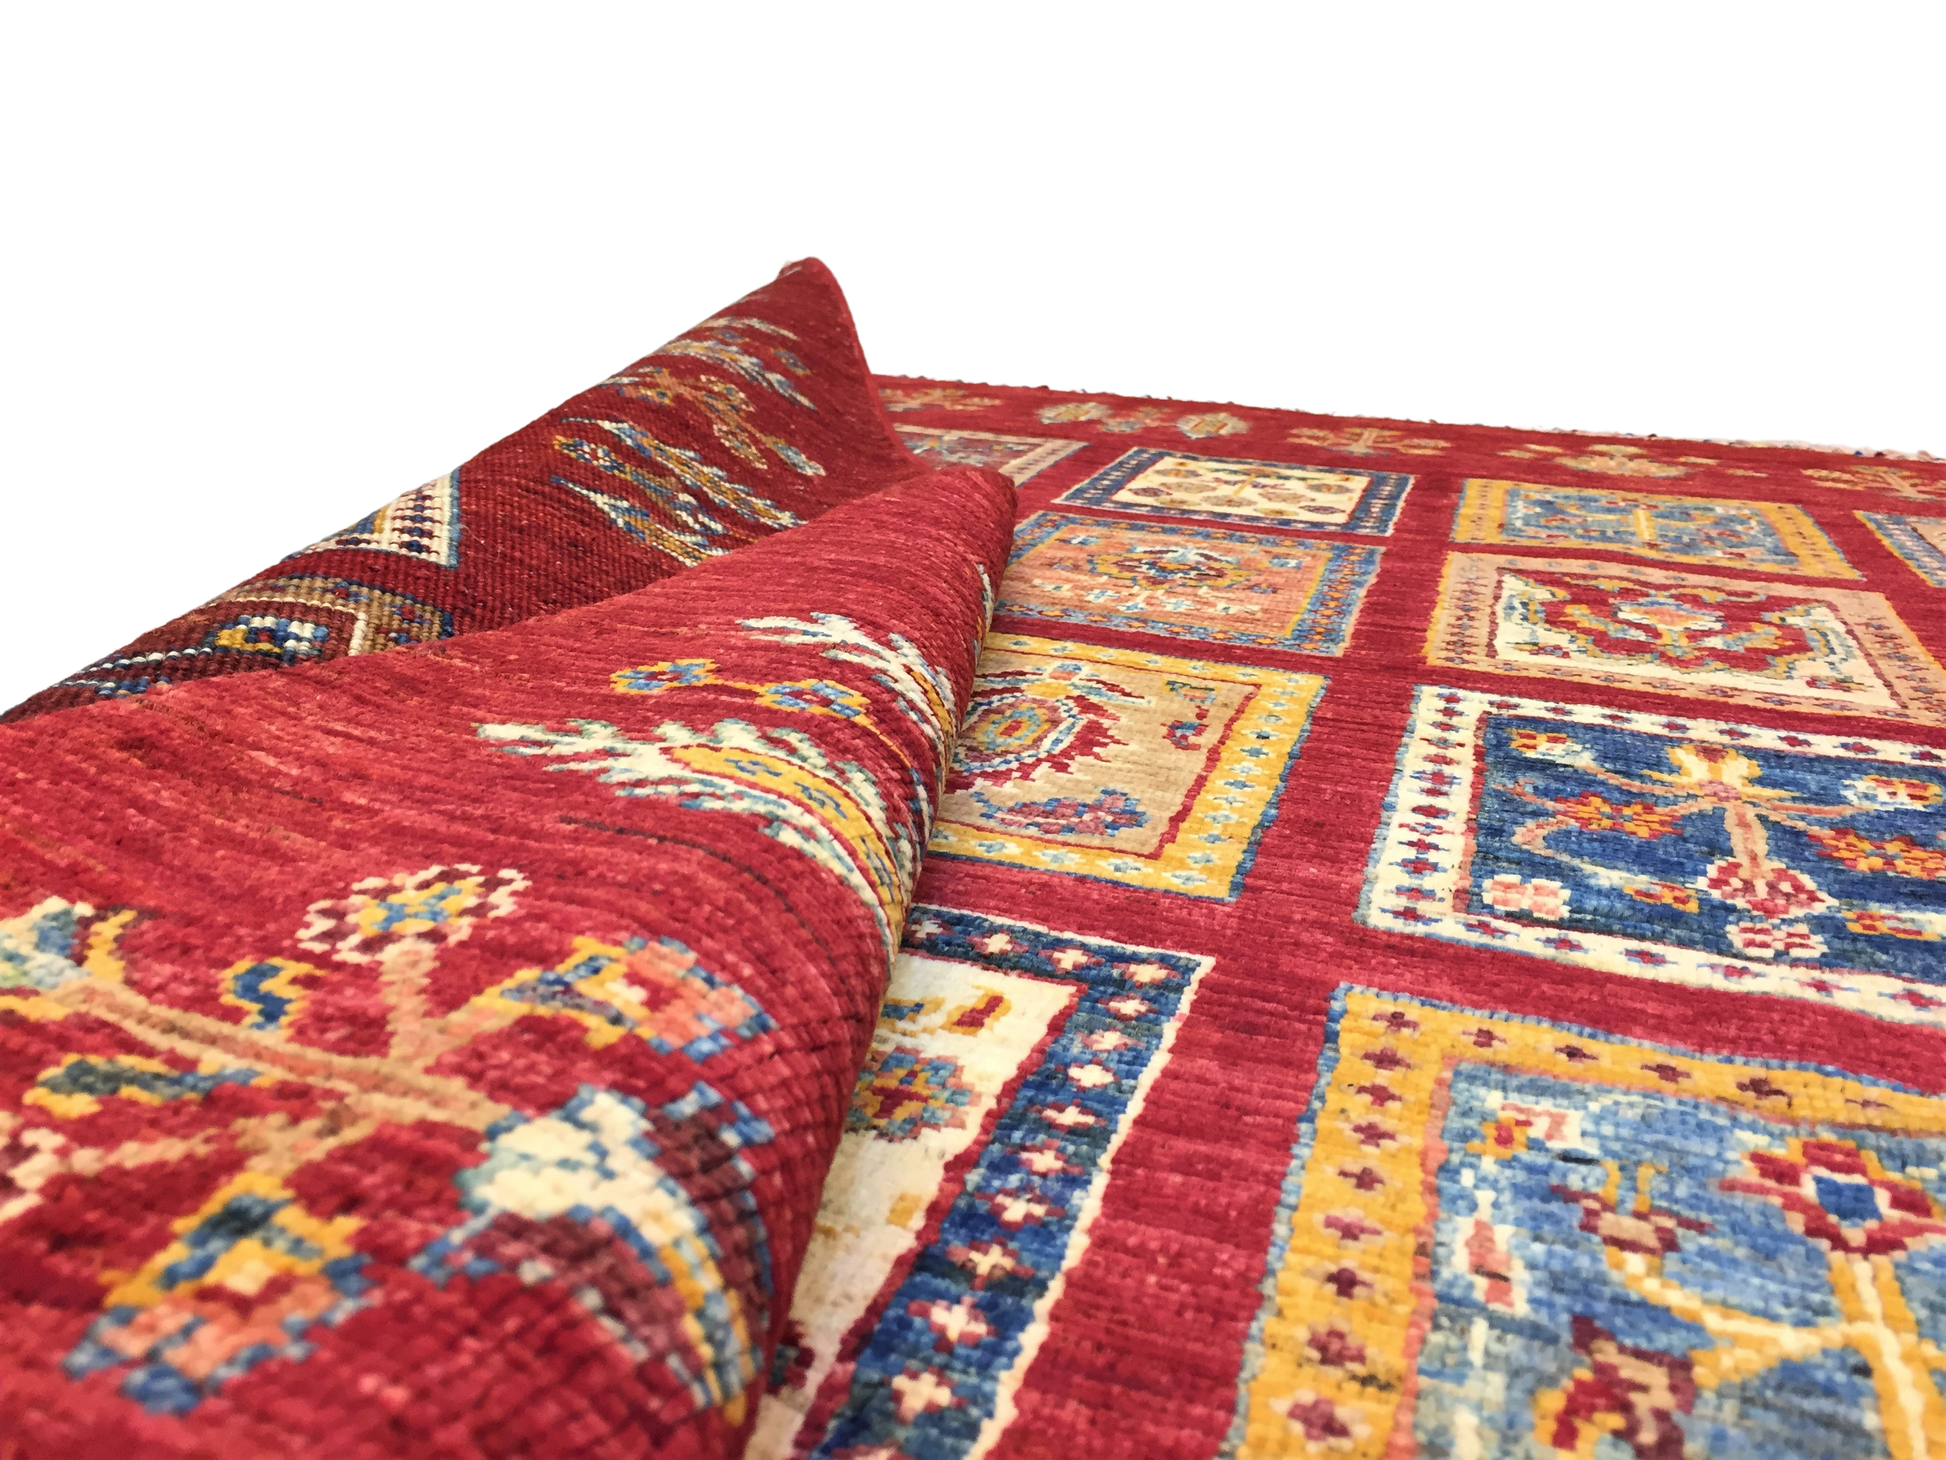 Şirvan Bicolor Carpet 206 X 155 cm - Alfombras de Estambul -  Turkish Carpets - Alfombras de Estambul